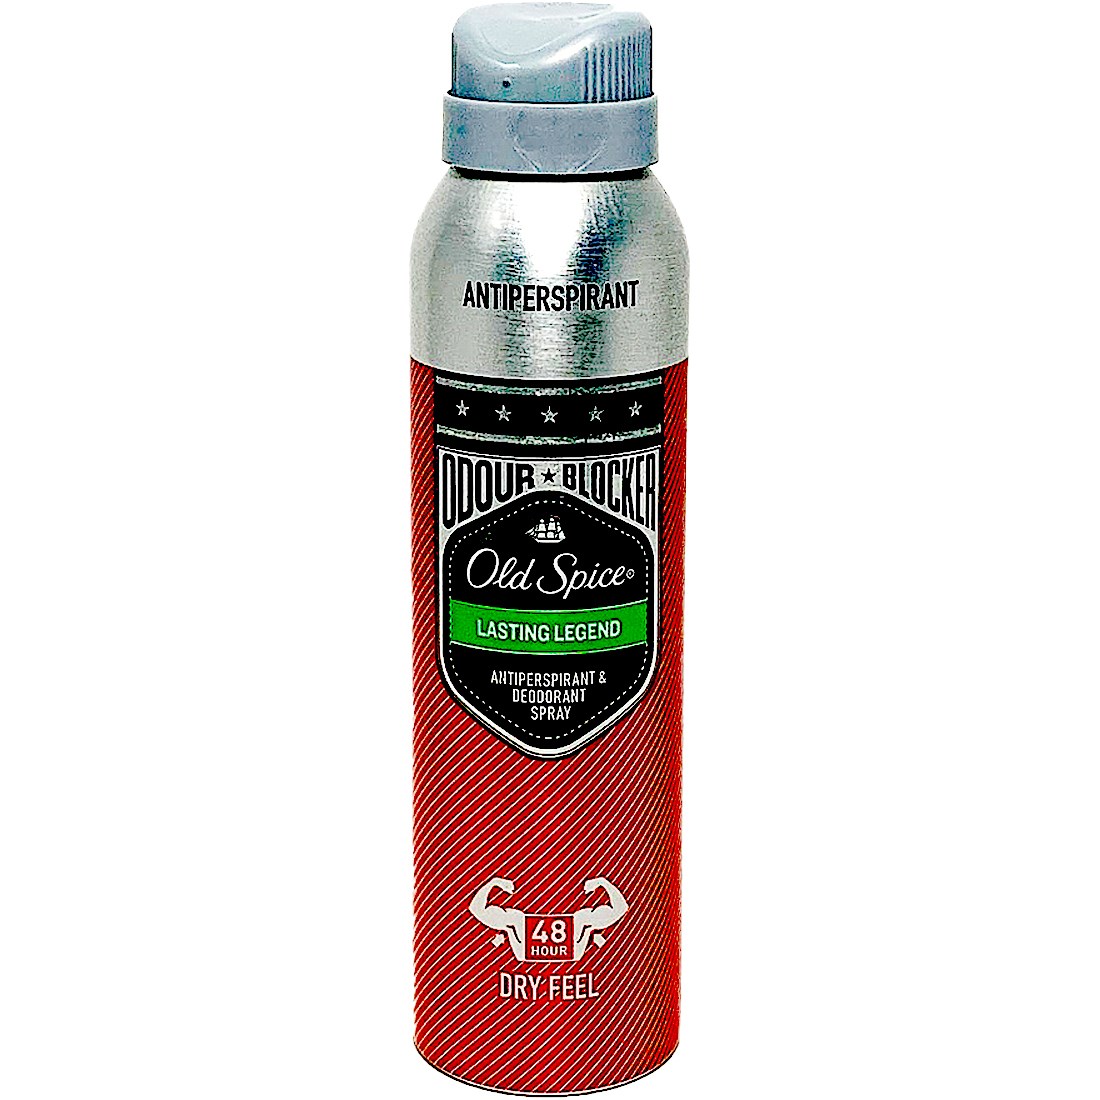 Wholesale old spice lasting legend antiperspirant deodorant body spray 150 ml